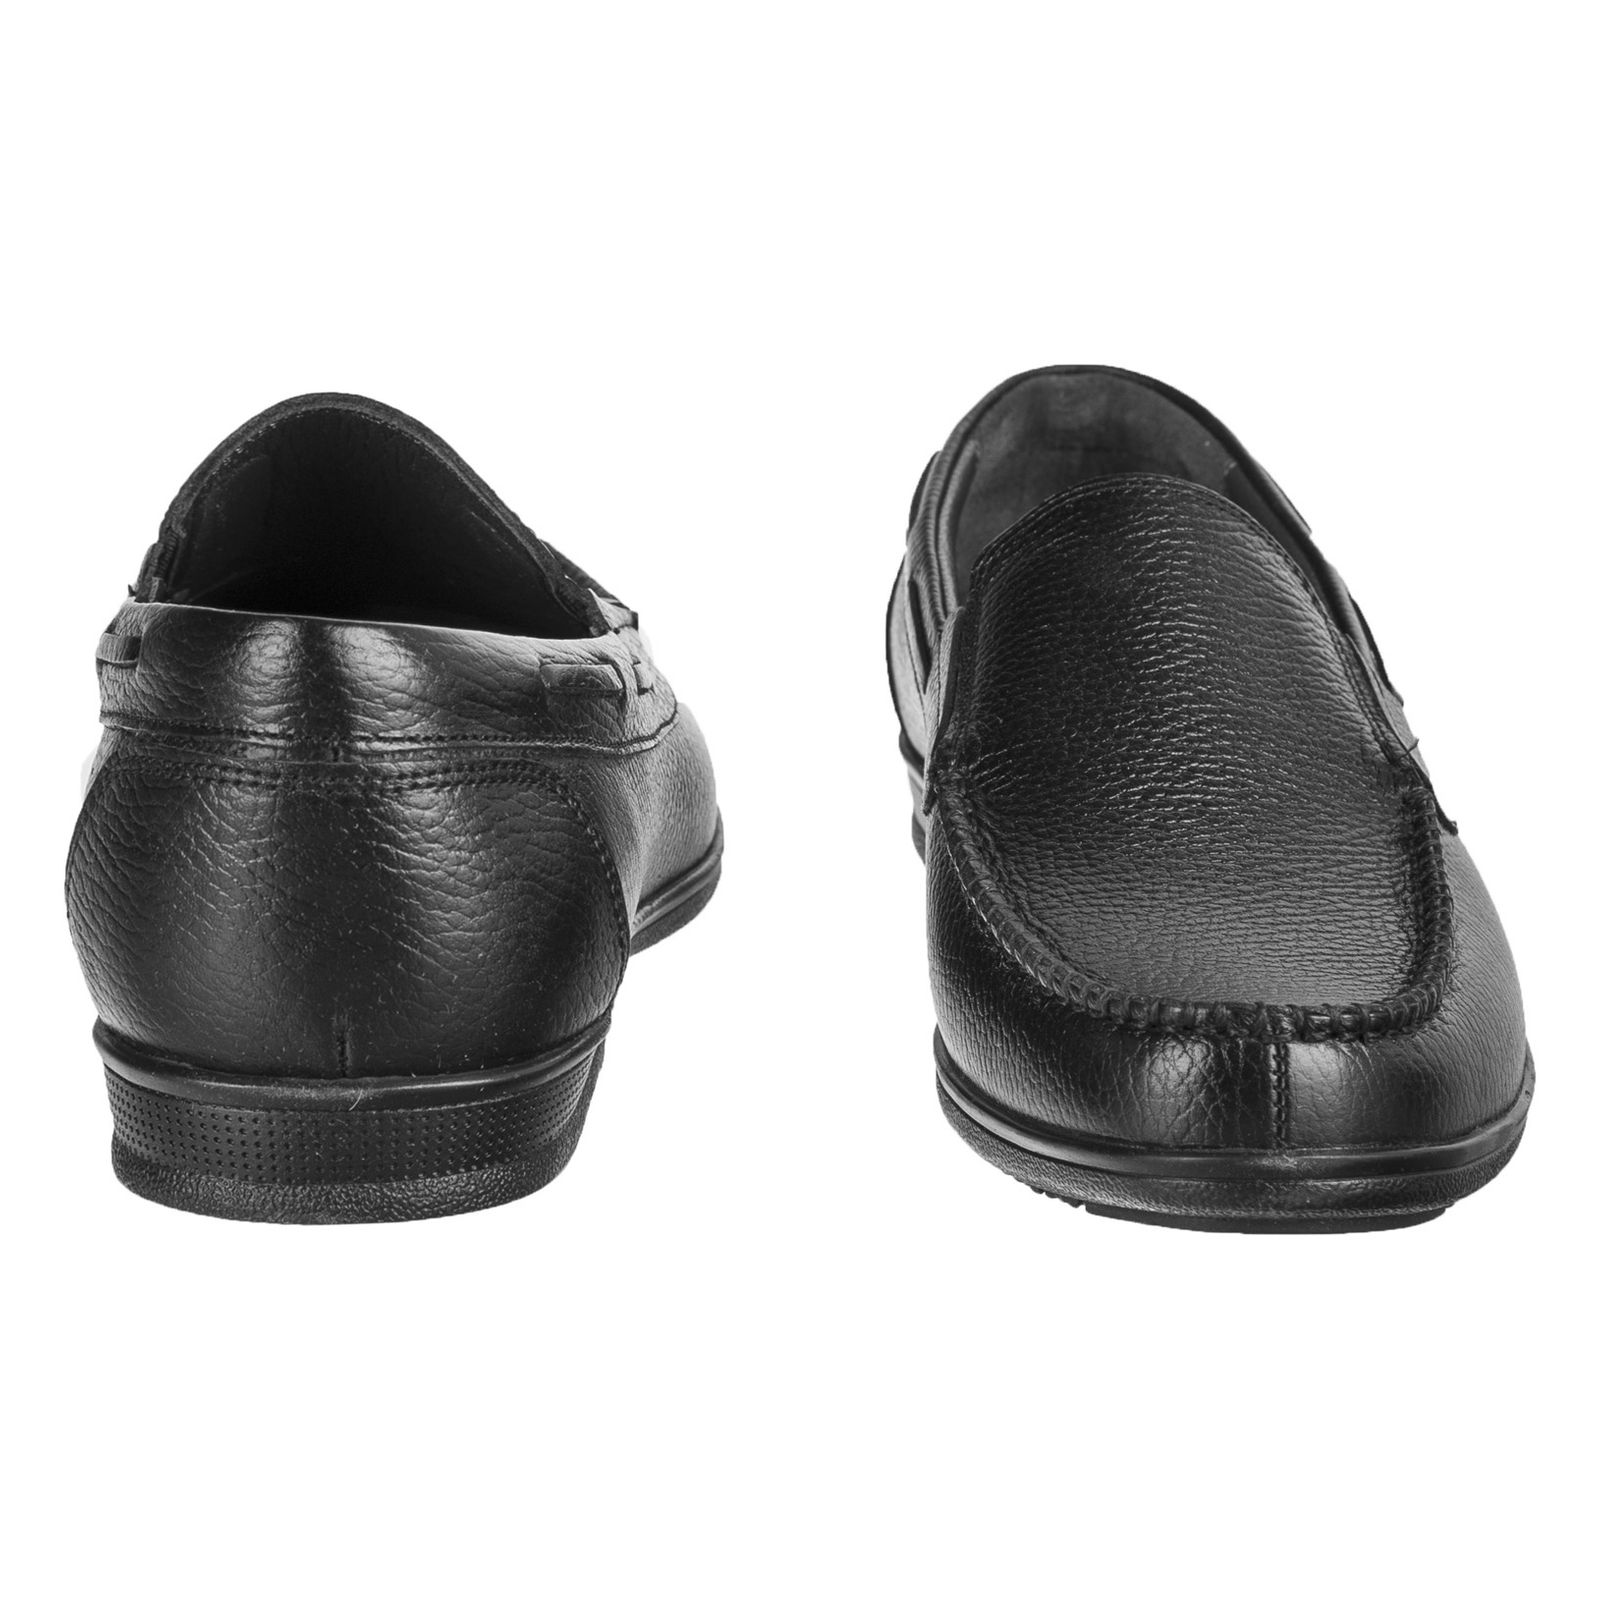 کفش روزمره مردانه دانادل مدل 7001H503101 - مشکی - 6